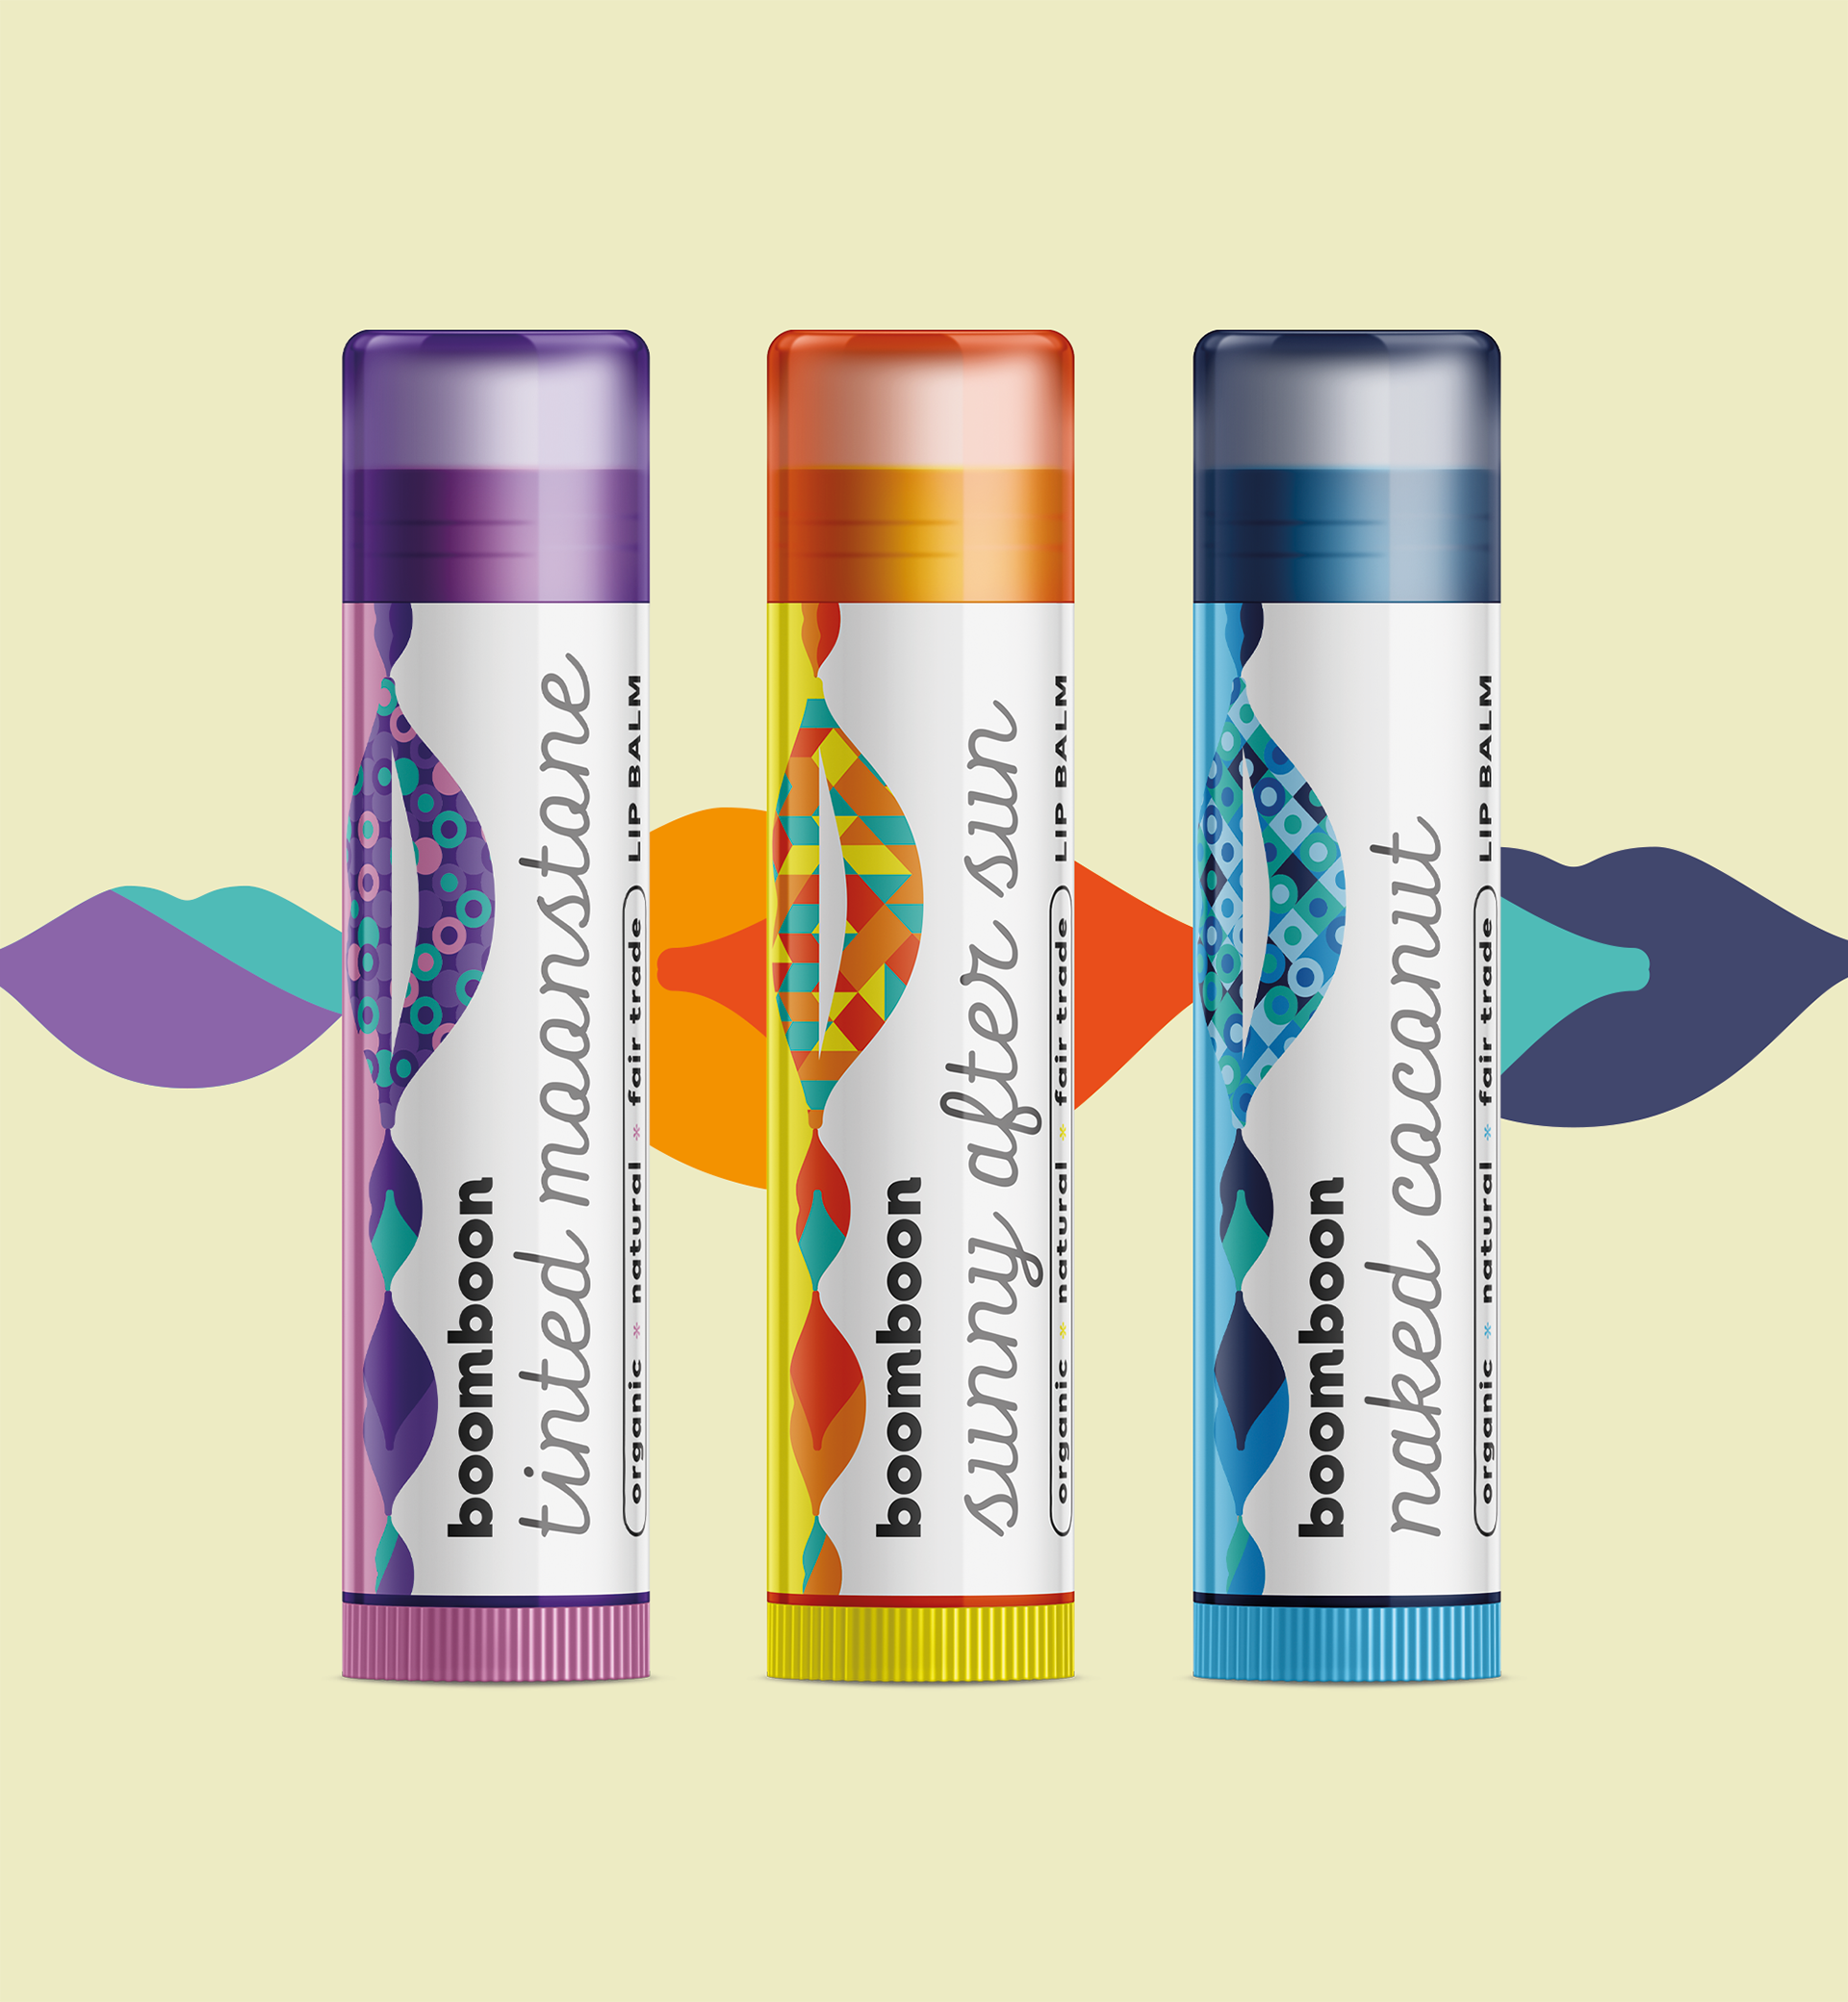 Download HOREA GRINDEAN - Your brand's friend - branding & packaging designer - lip balm packaging design ...